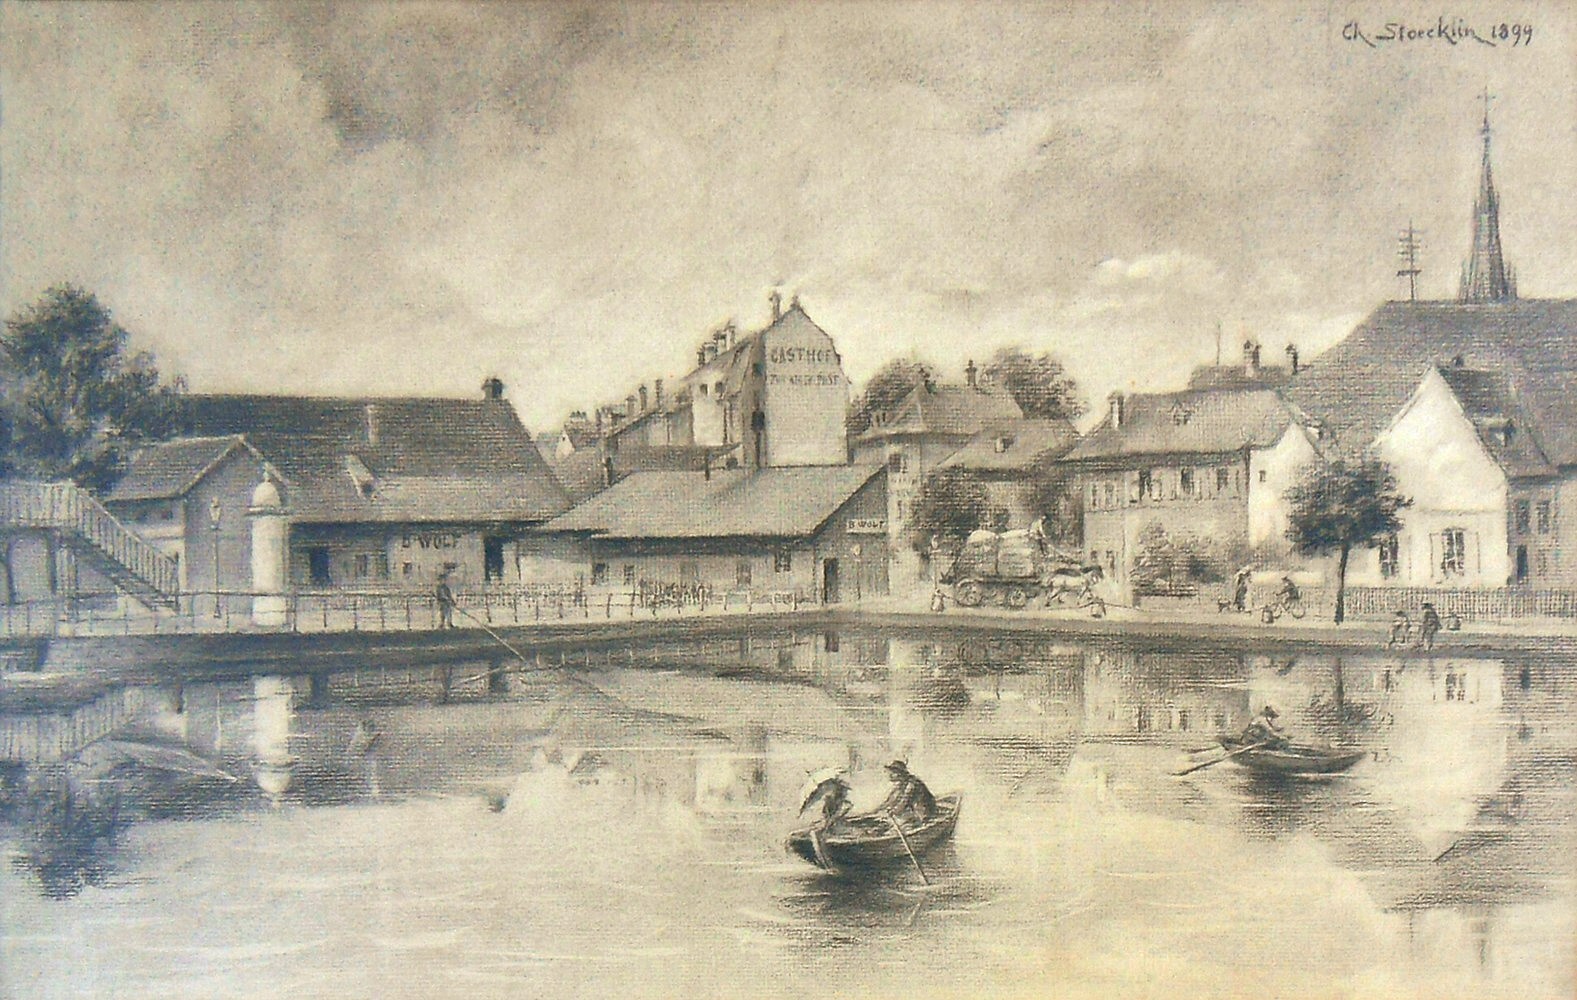 CHARLES-STOECKLIN-Mulhouse-29-50cm-1899